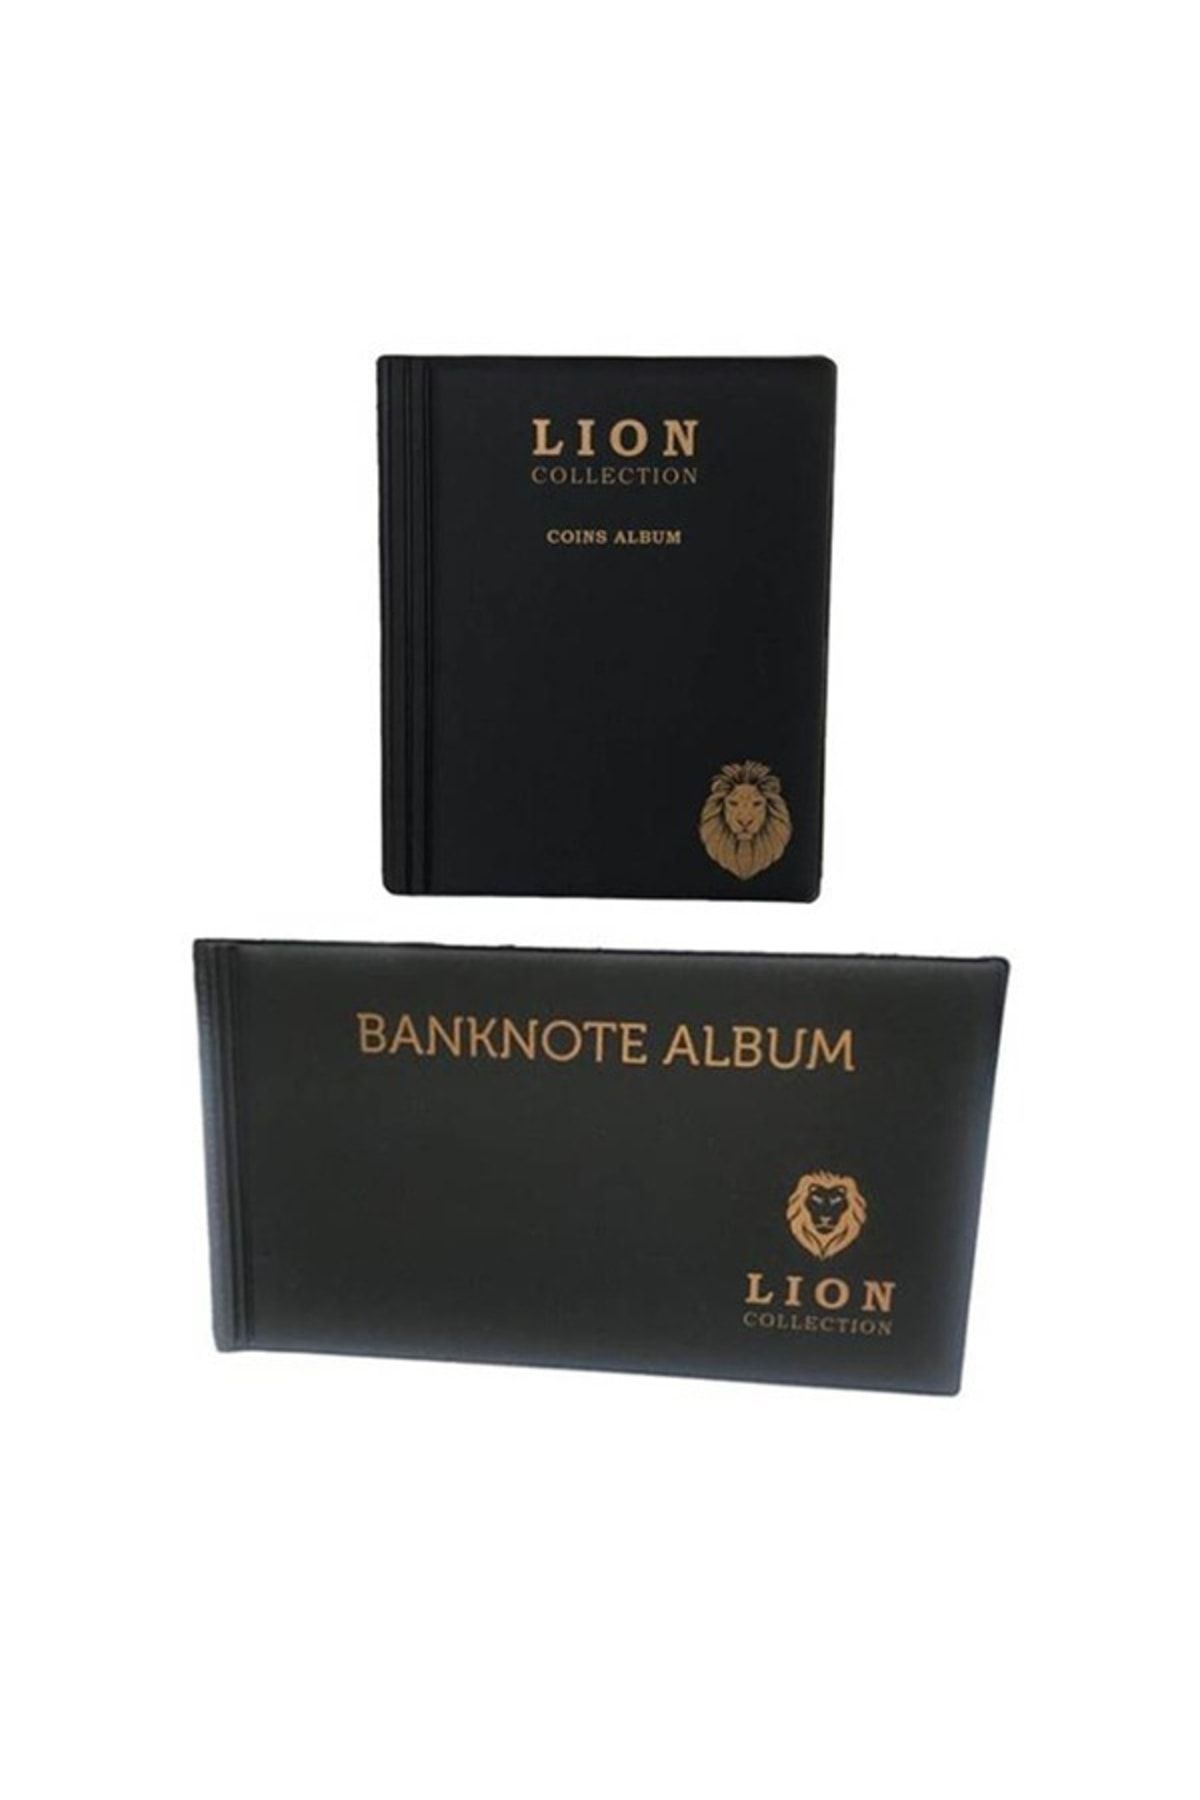 Lion Cep Albümü Seti - Madeni Ve Kağıt Para Cep Albümü 2 Li, Siyah Renk